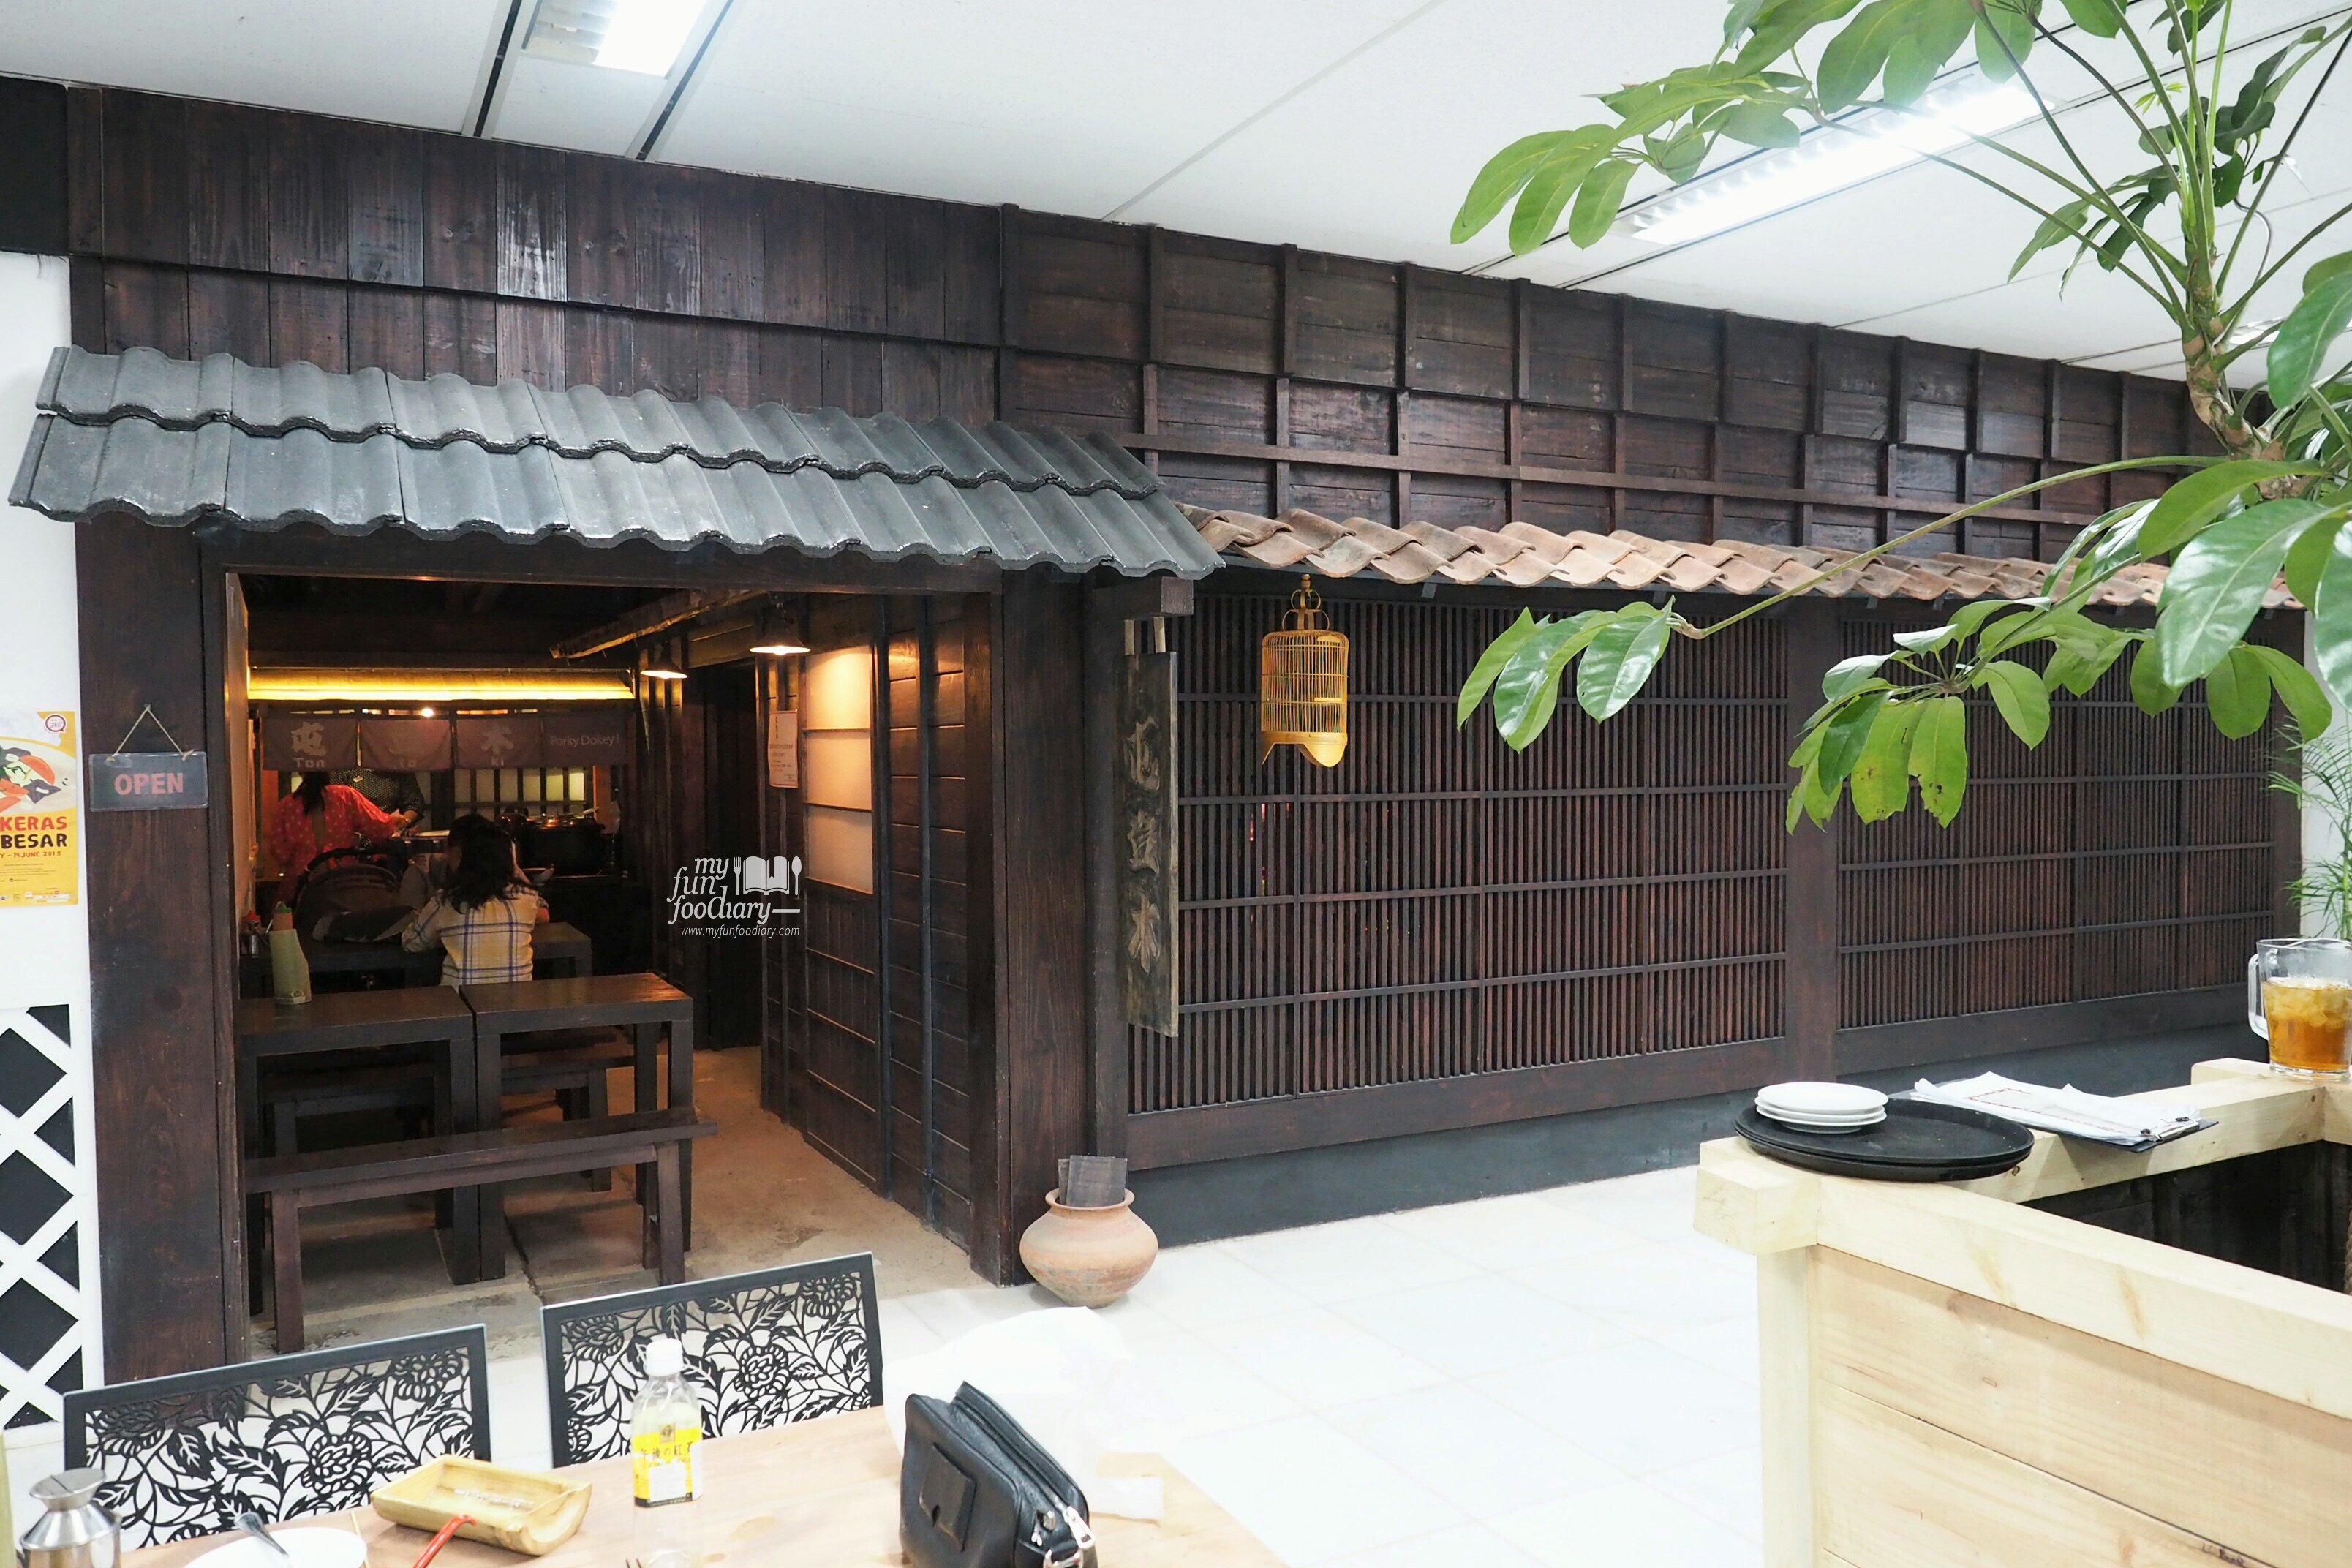 Exterior Look at Tontoki Restaurant MidPlaza by Myfunfoodiary